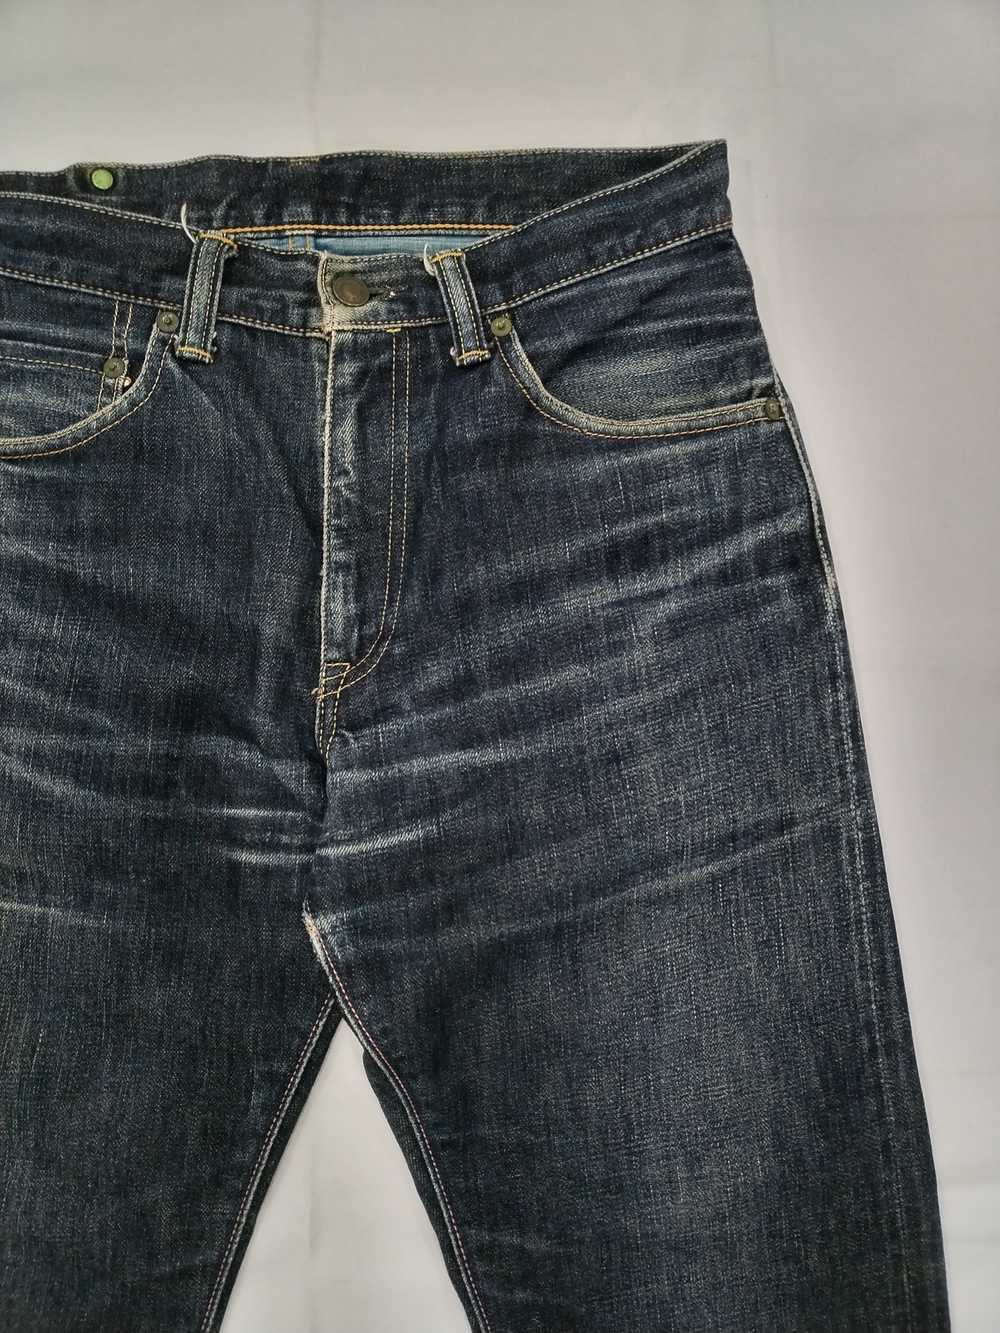 Japanese Brand × Momotaro Momotaro Selvedge Jeans - image 3